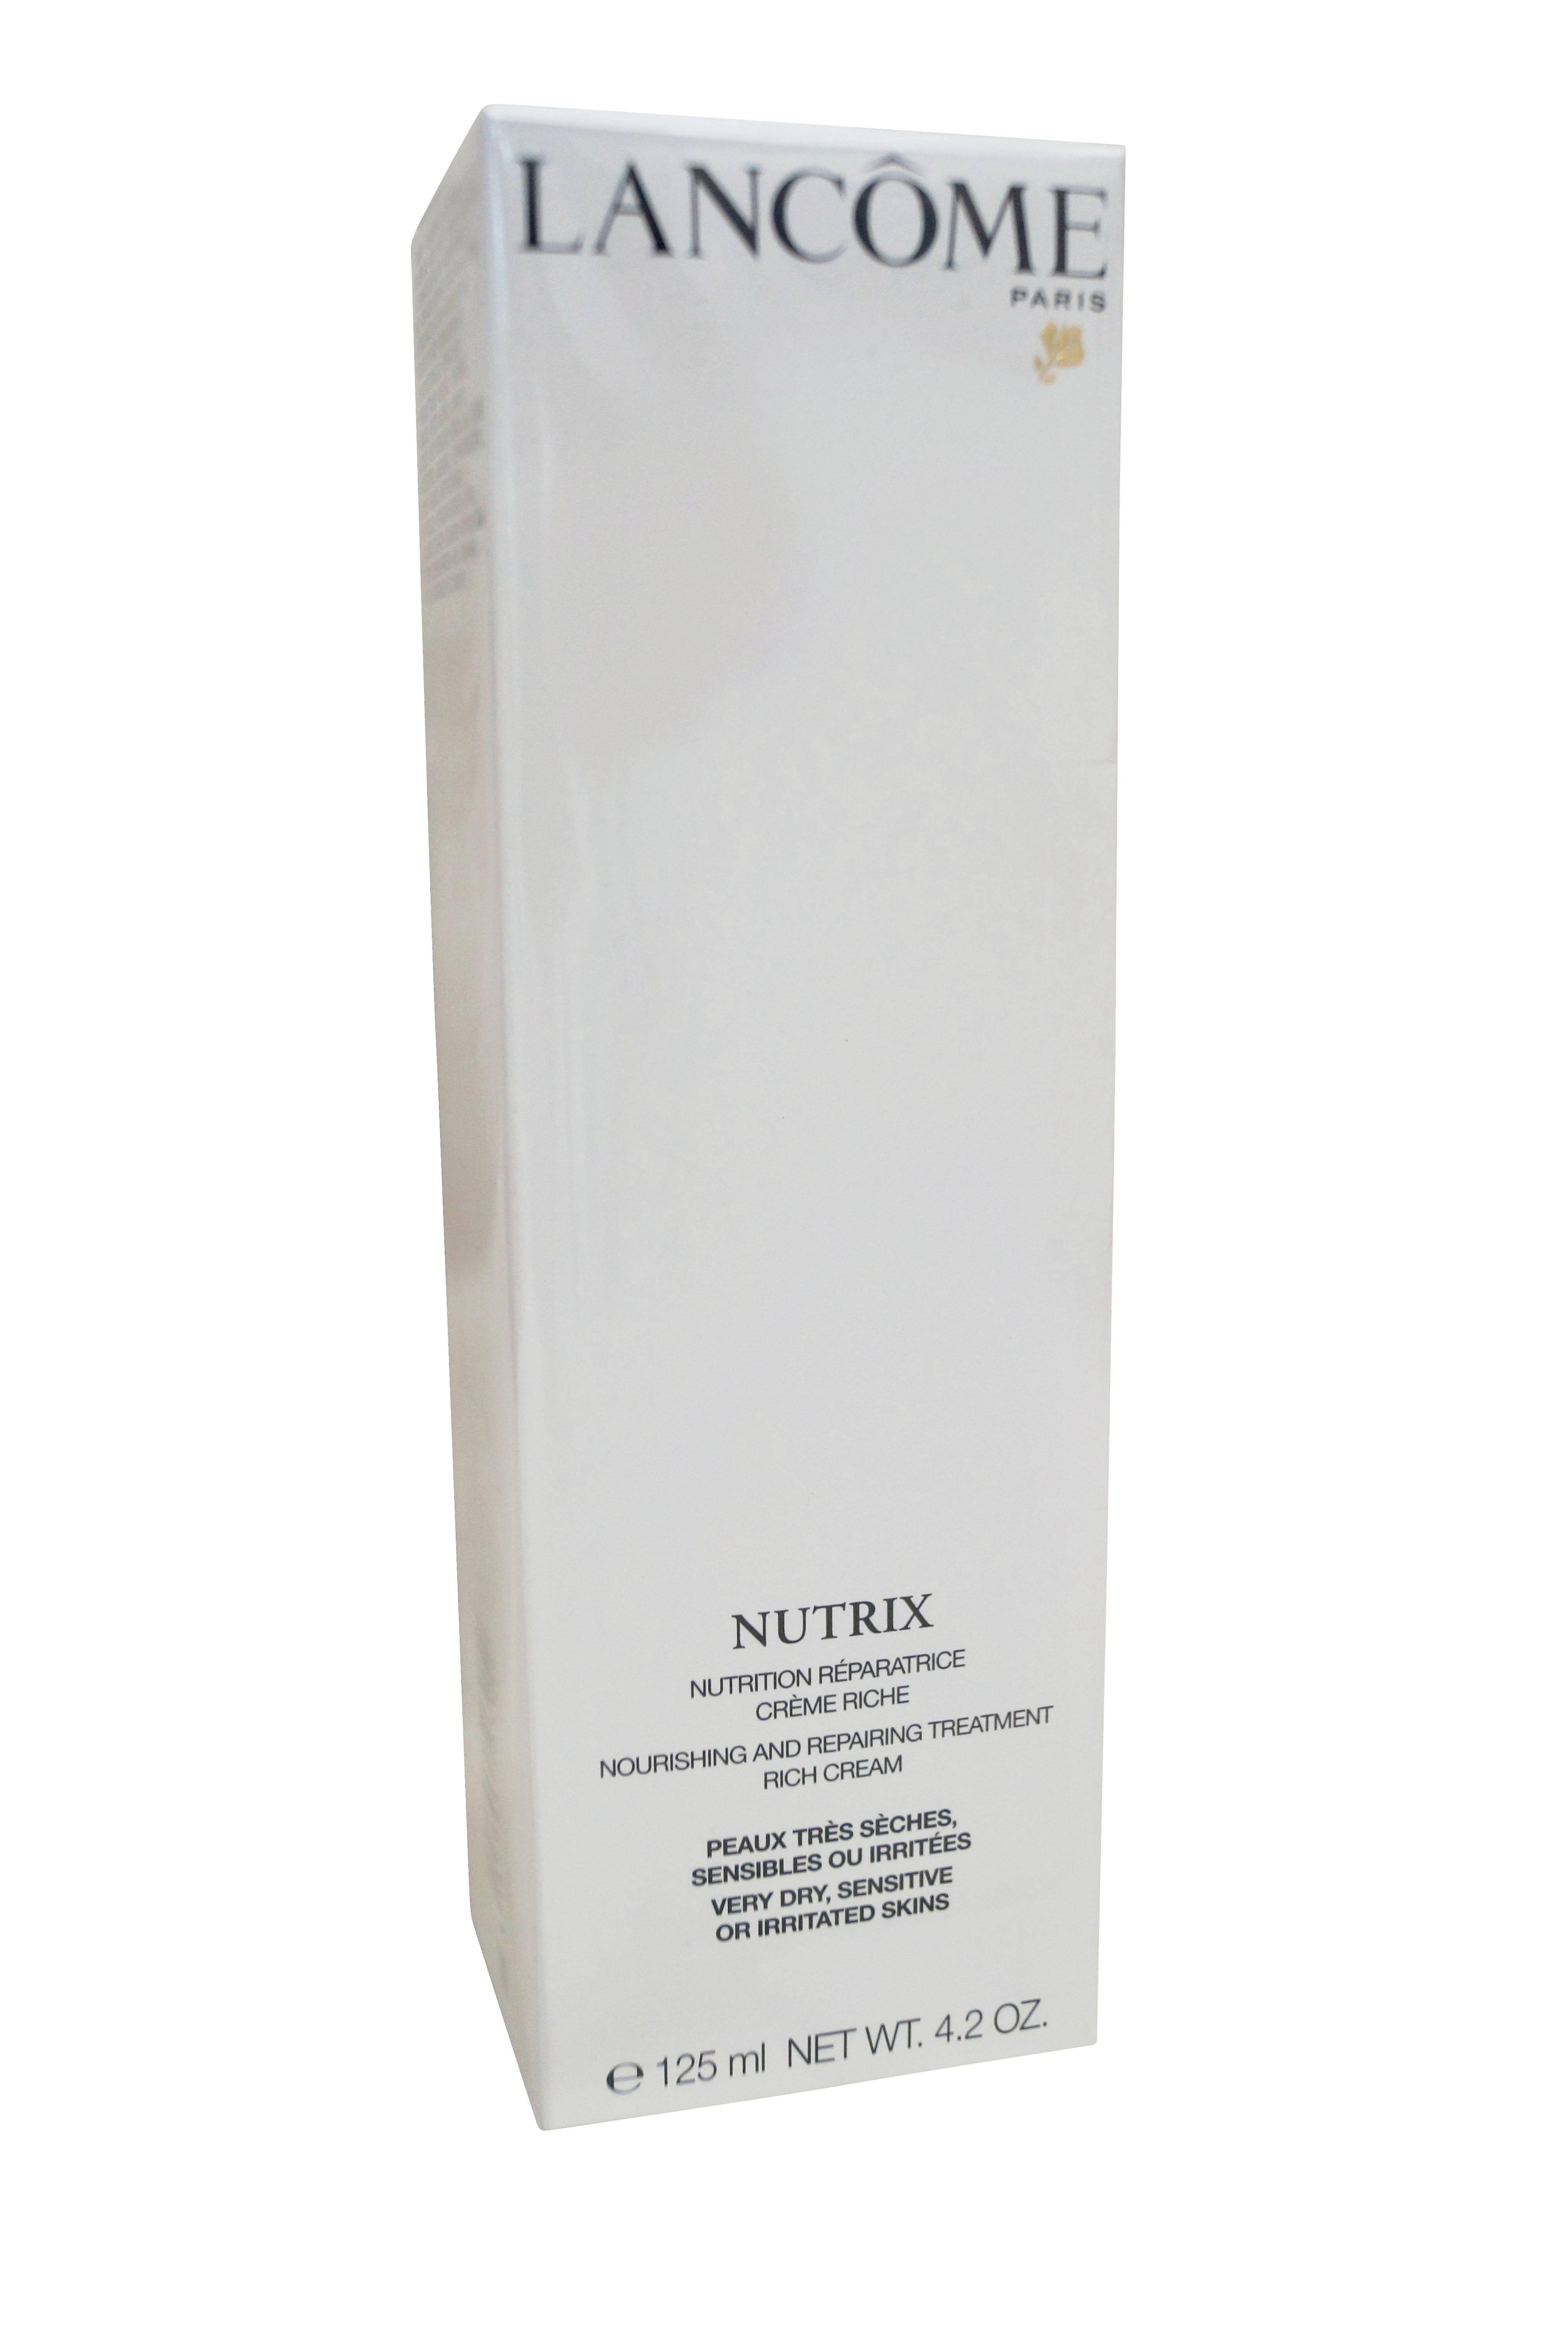 Lancome Nutrix Nourishing And Repairing Treatment Moisturising Cream